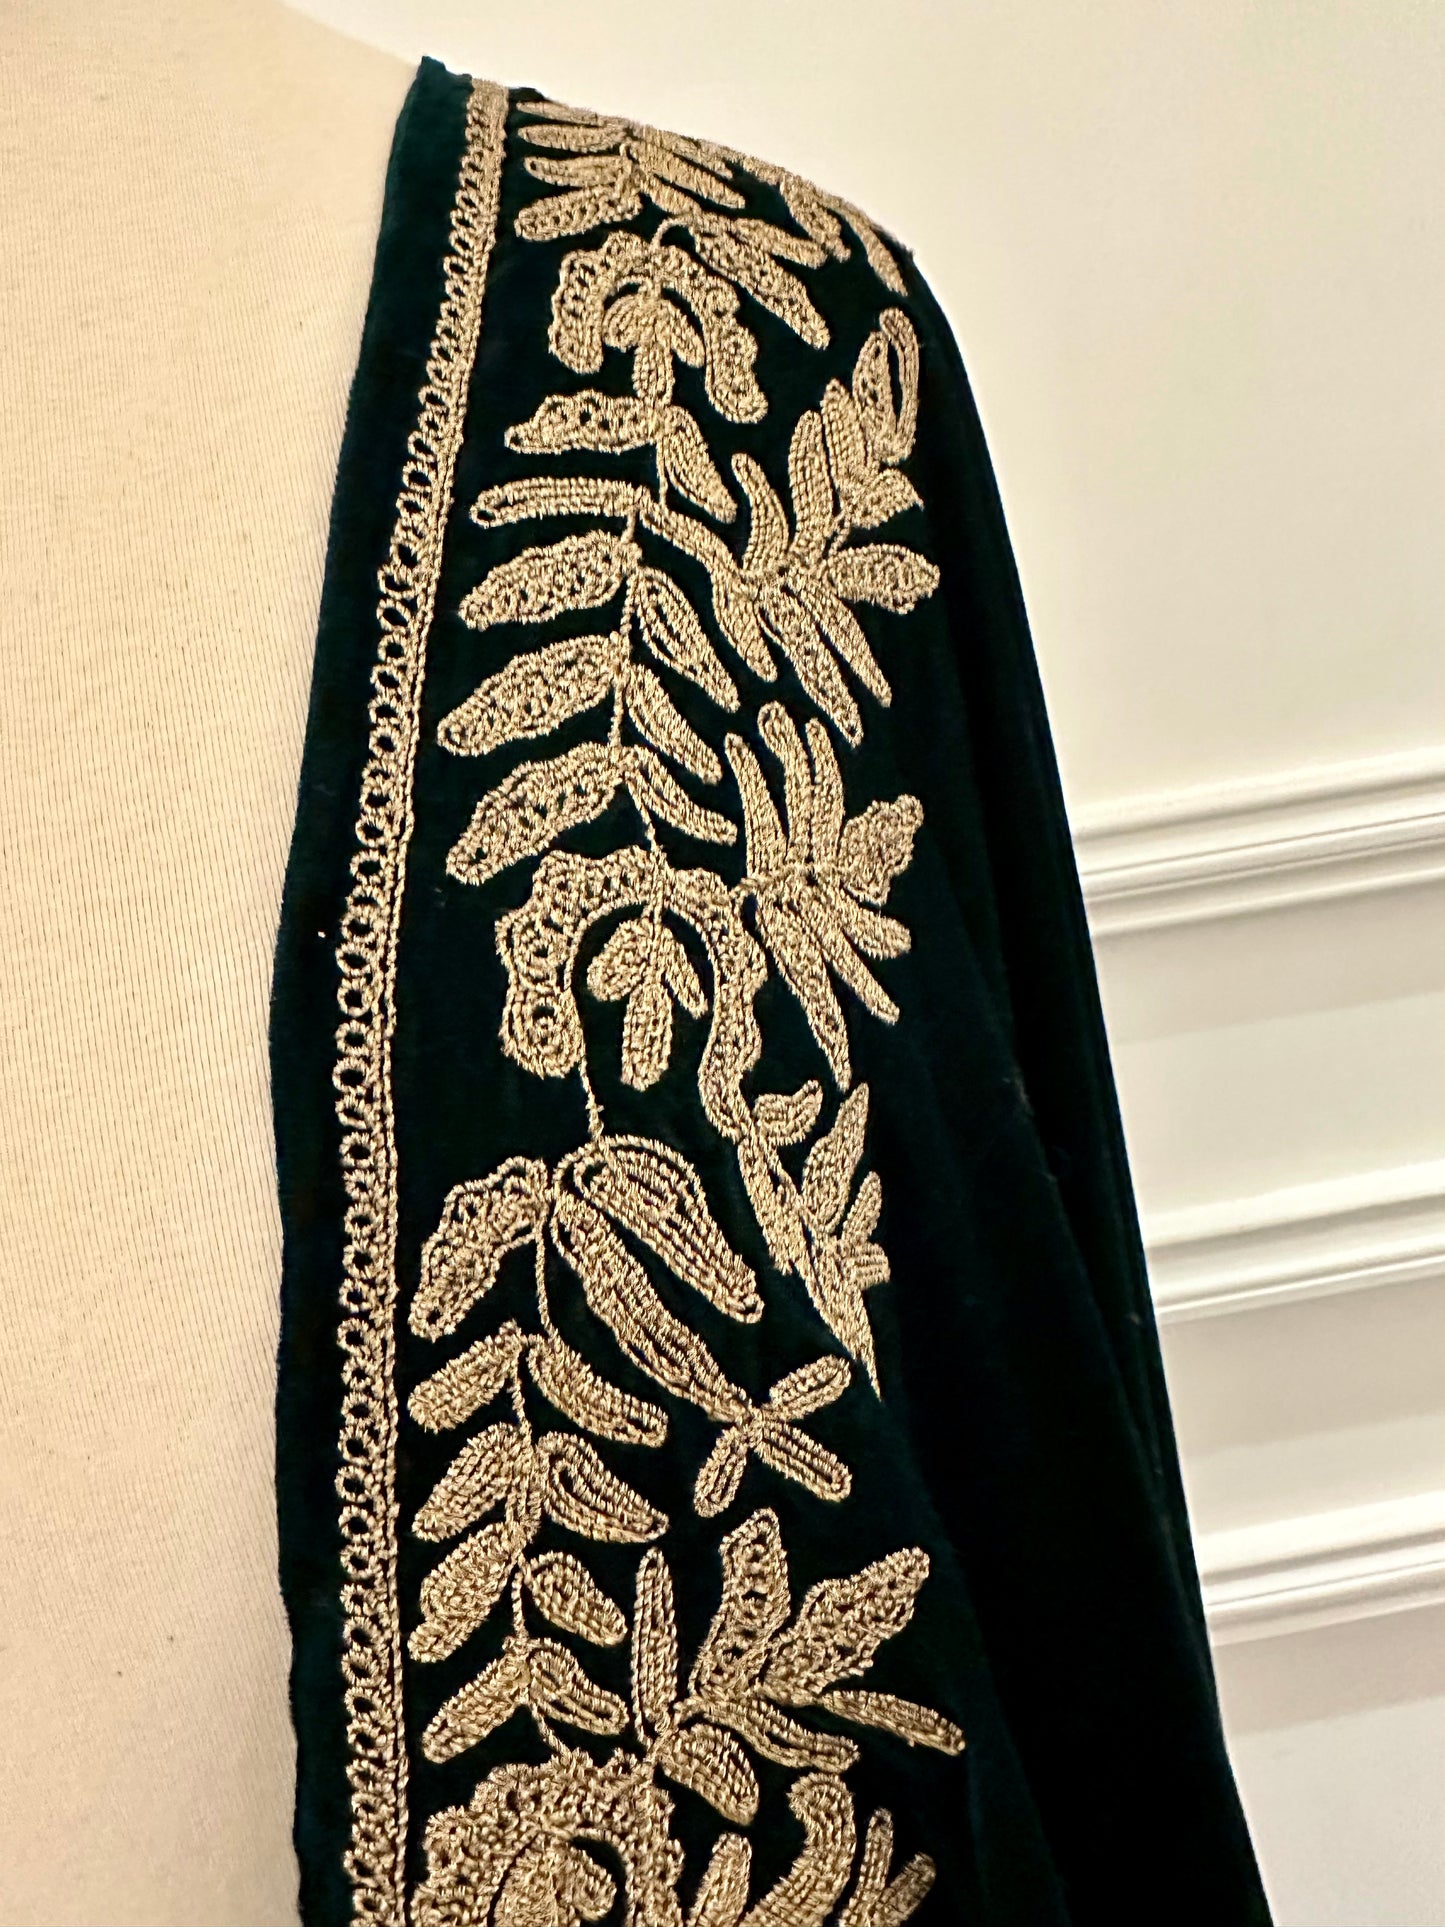 VT-169 Floral dori work embroidered unisex shawl